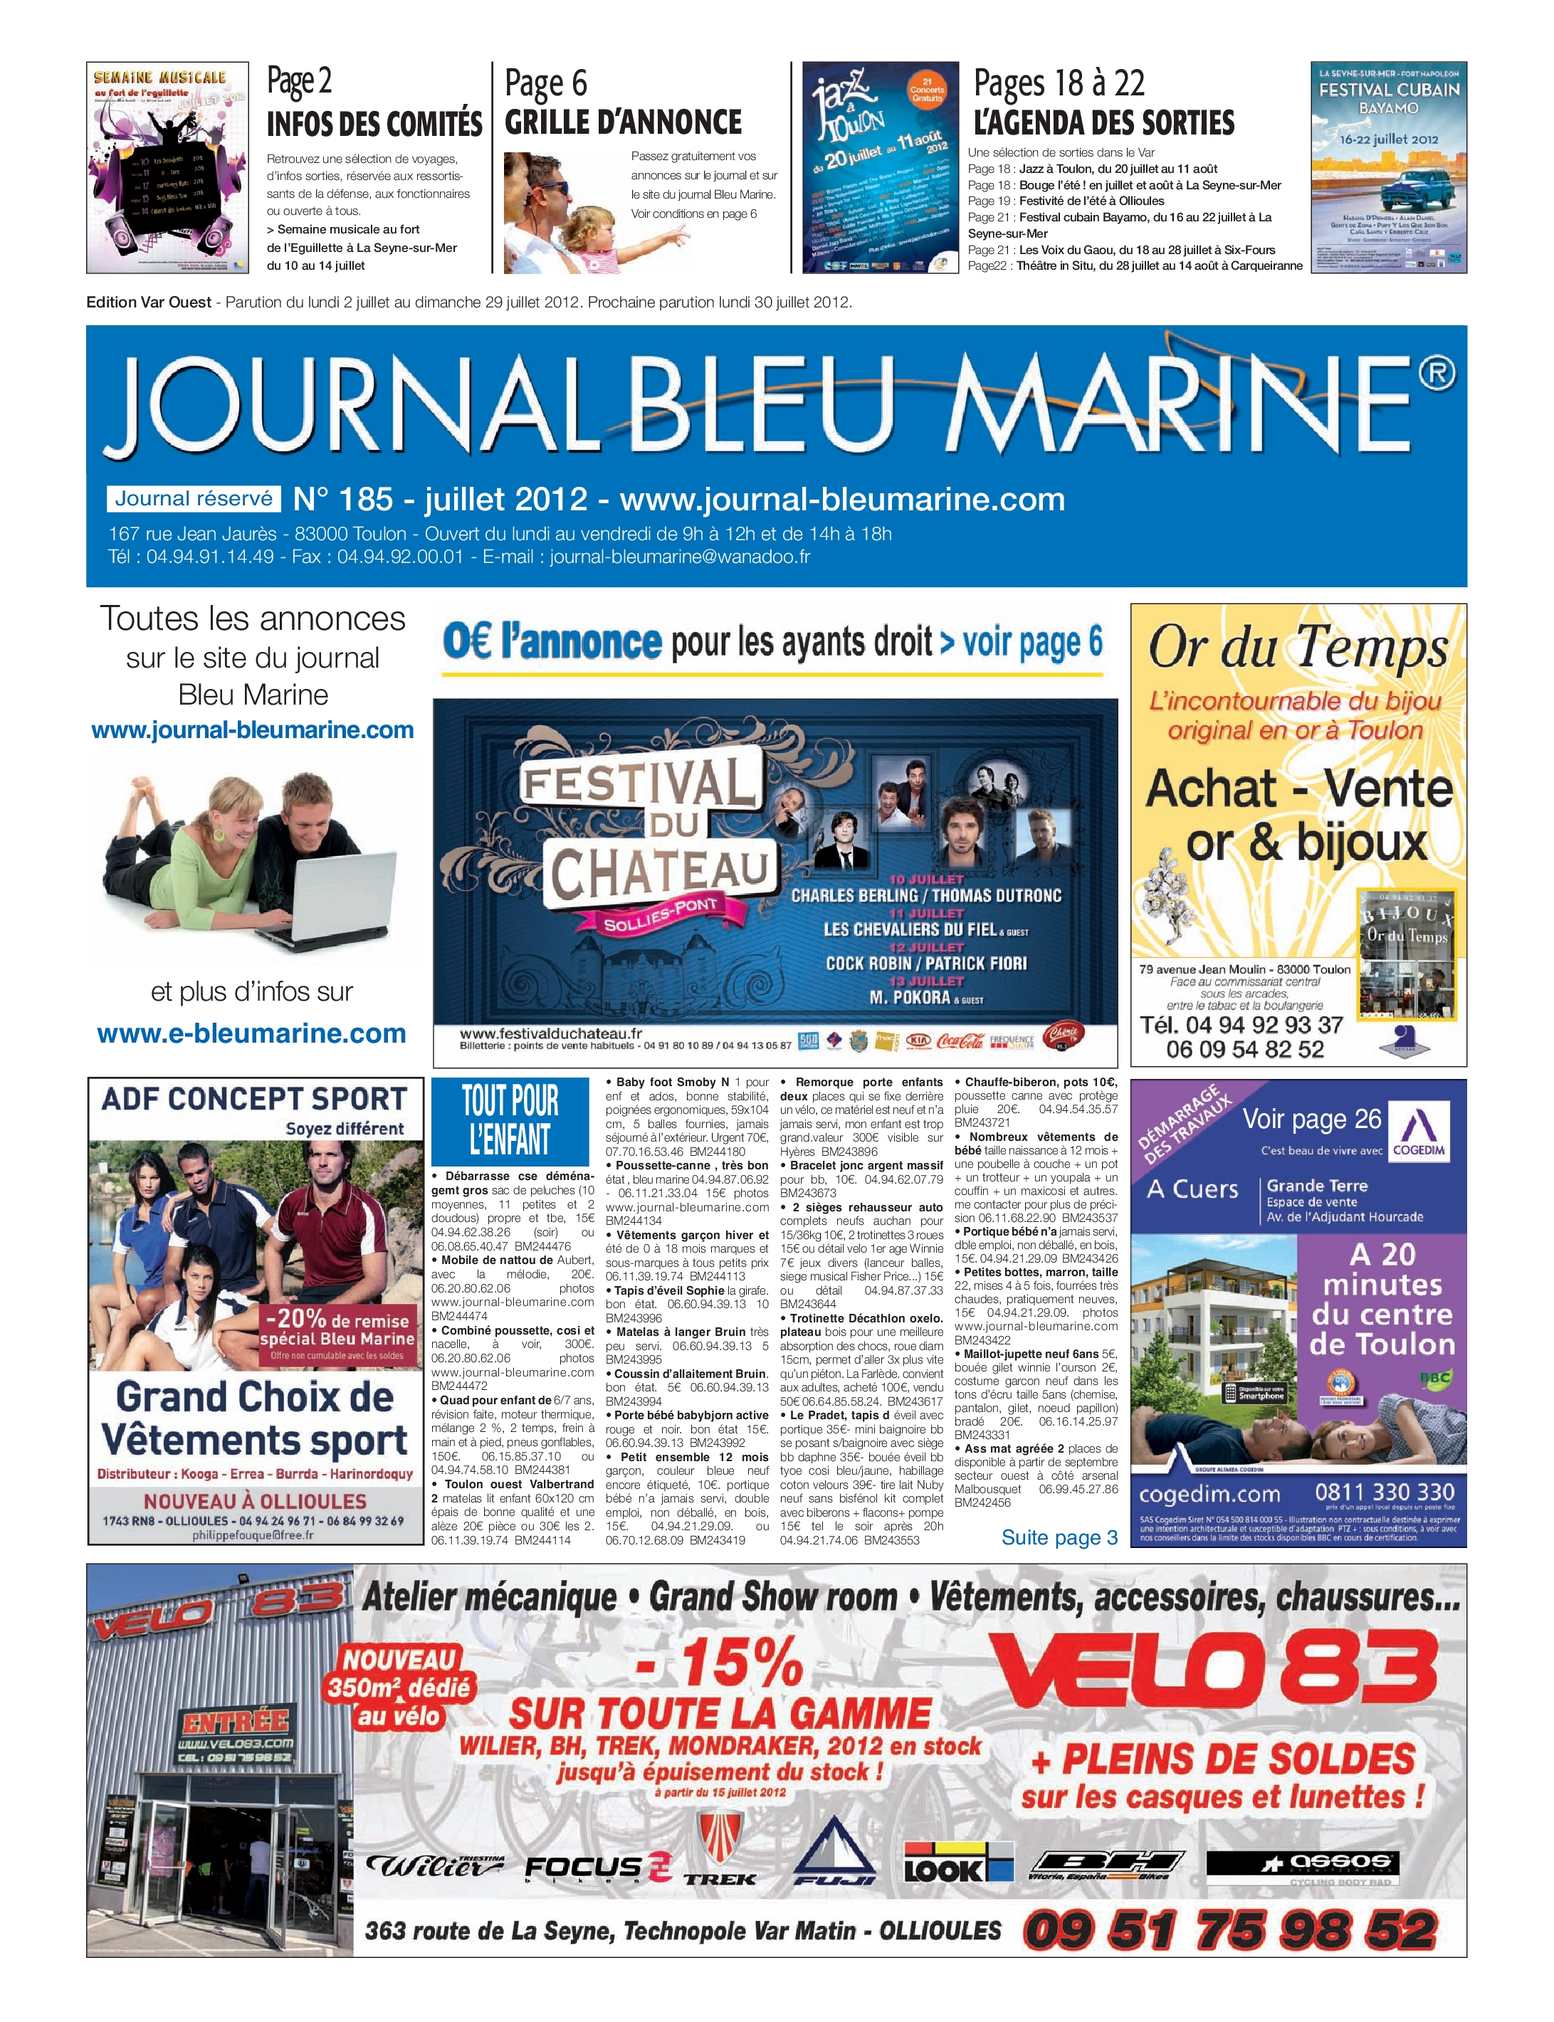 Salon Bas De Jardin soldes Élégant Calaméo Journal Bleu Marine N°185 Juillet 2012